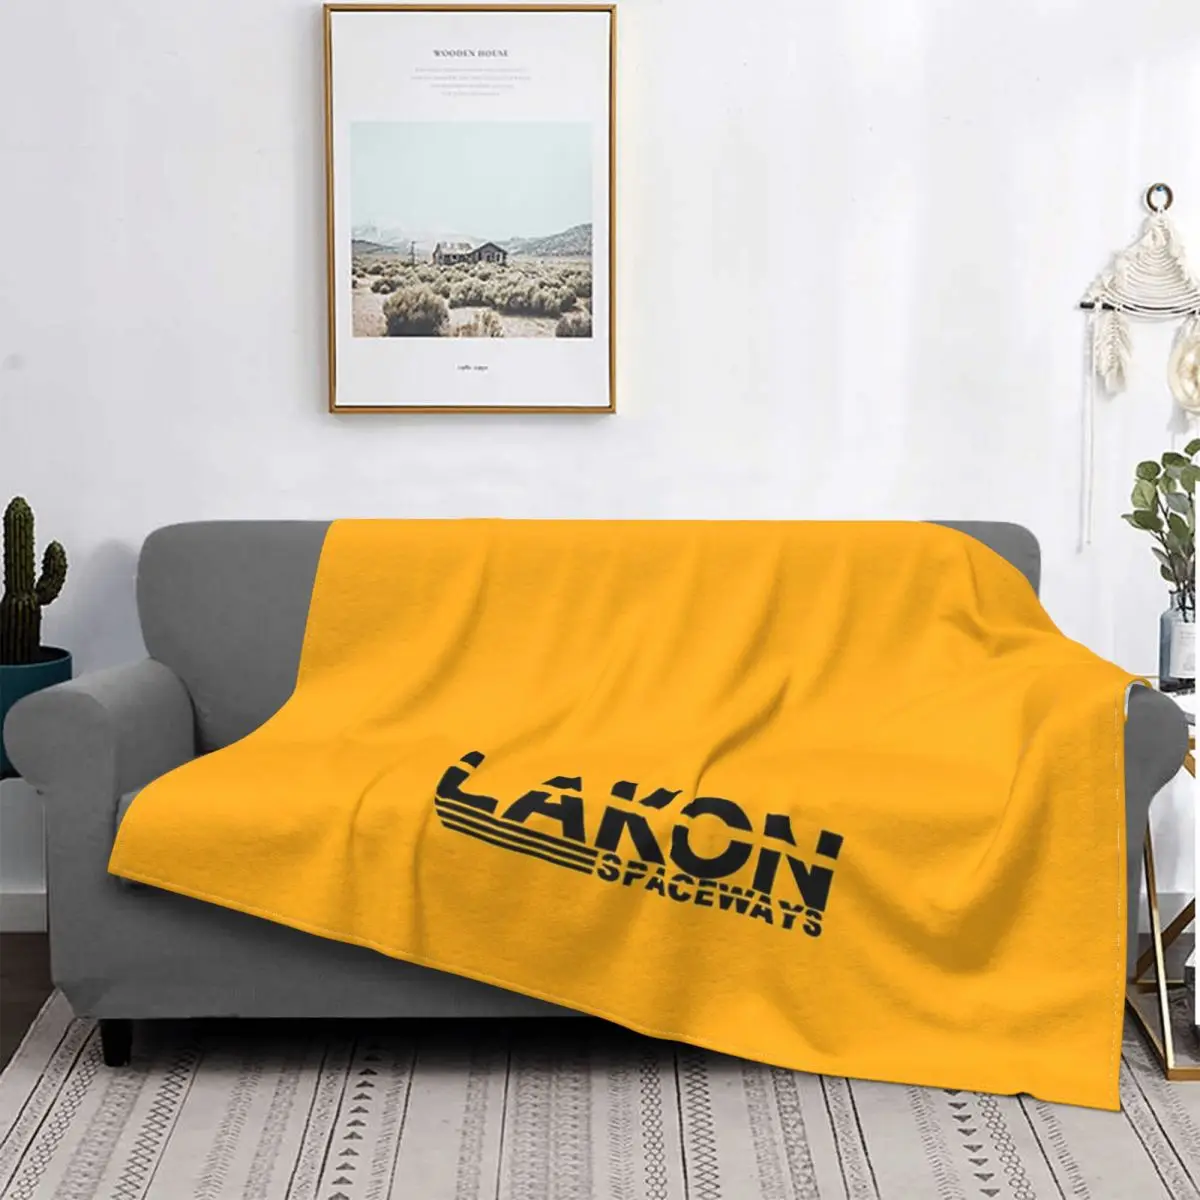 

Lakon spacedays-Manta de Elite Dangerous, colcha a cuadros para cama, sofá, cama, manta de Picnic, textil de lujo para el hogar